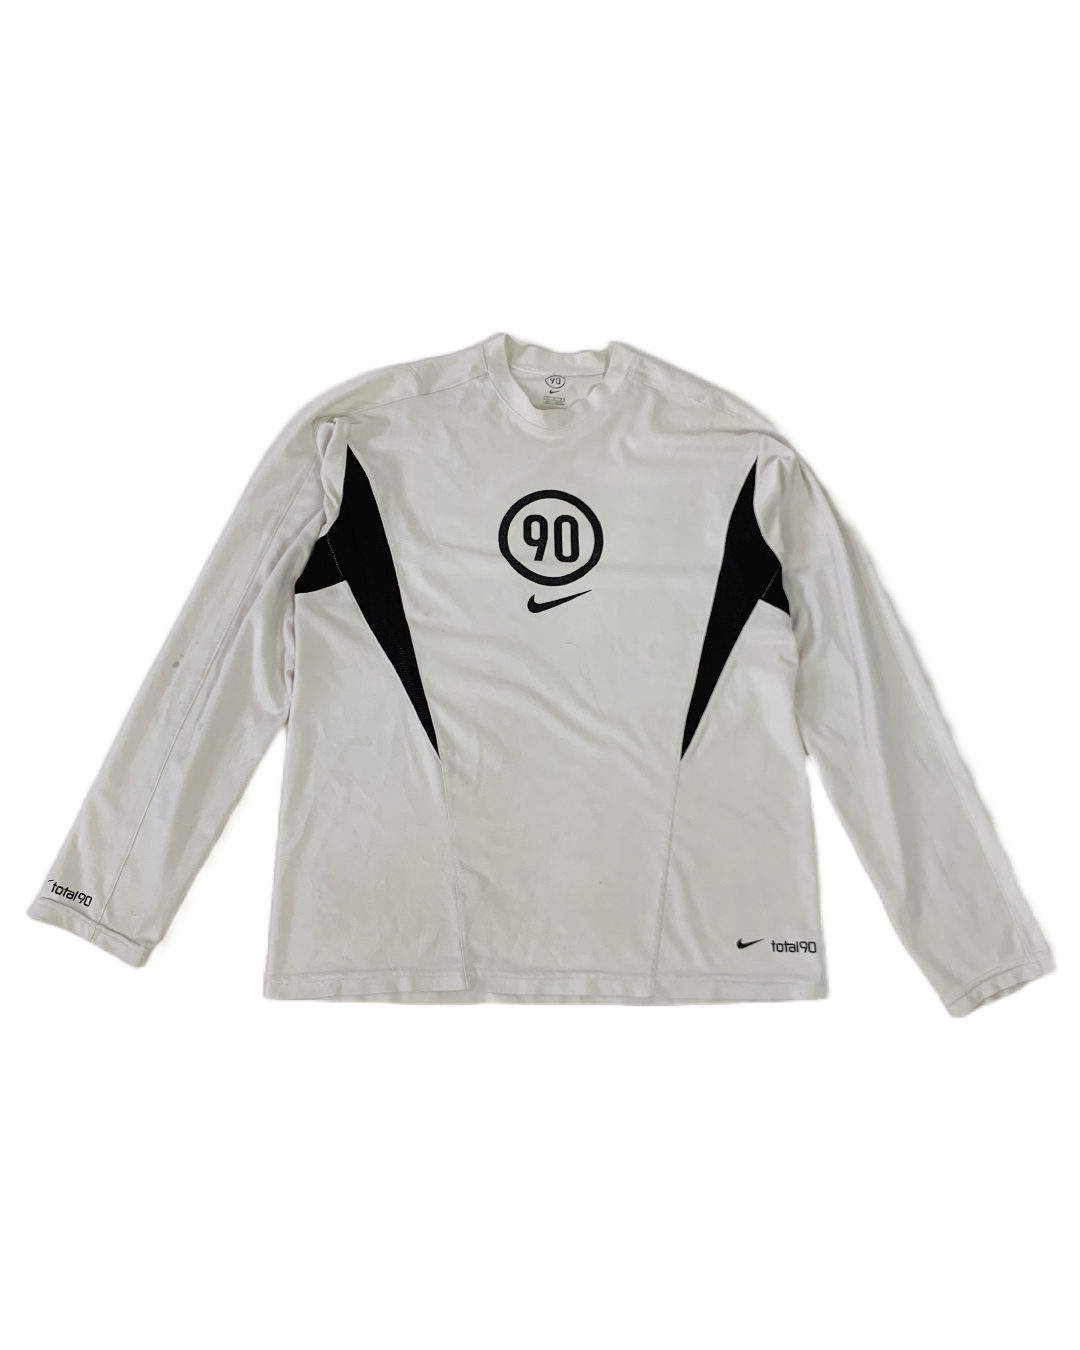 Nike Total 90 Vintage Jersey - M